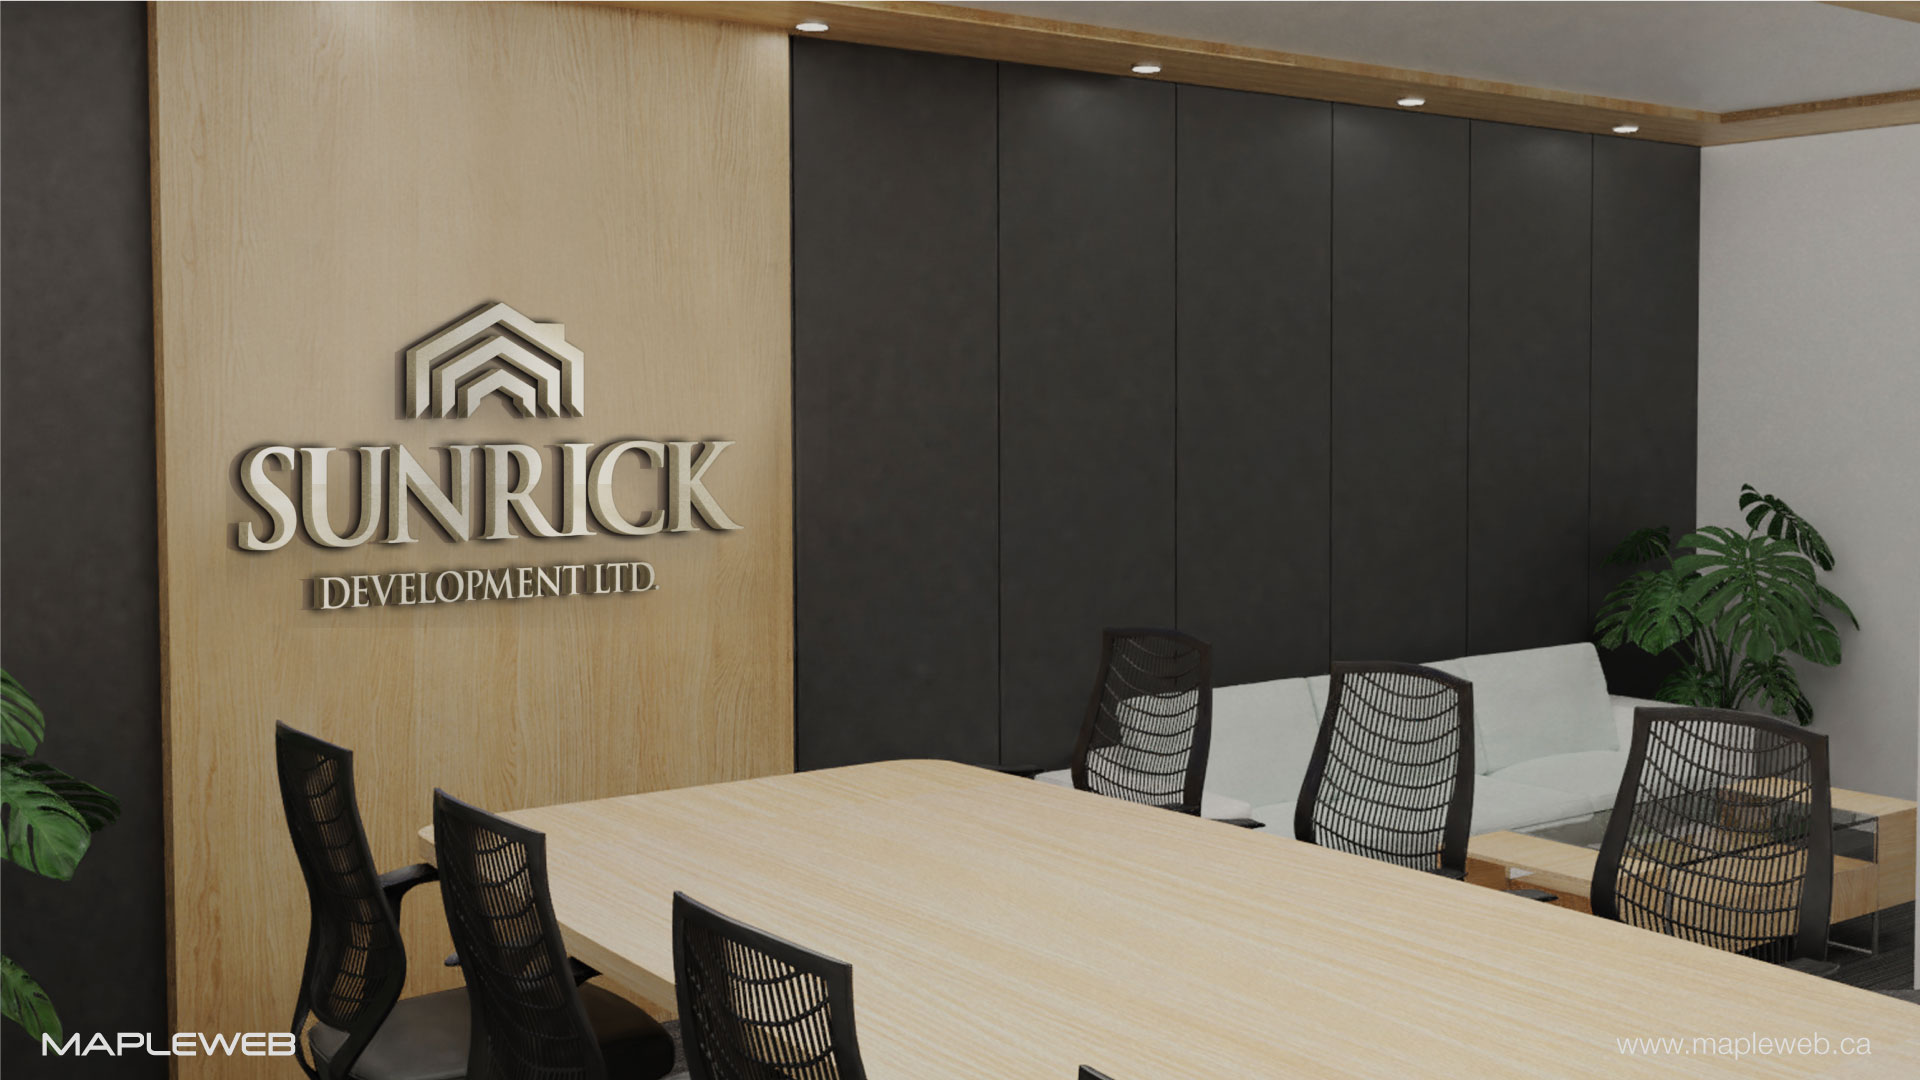 sunrick-development-ltd-brand-logo-design-by-mapleweb-vancouver-canada-office-wall-mock